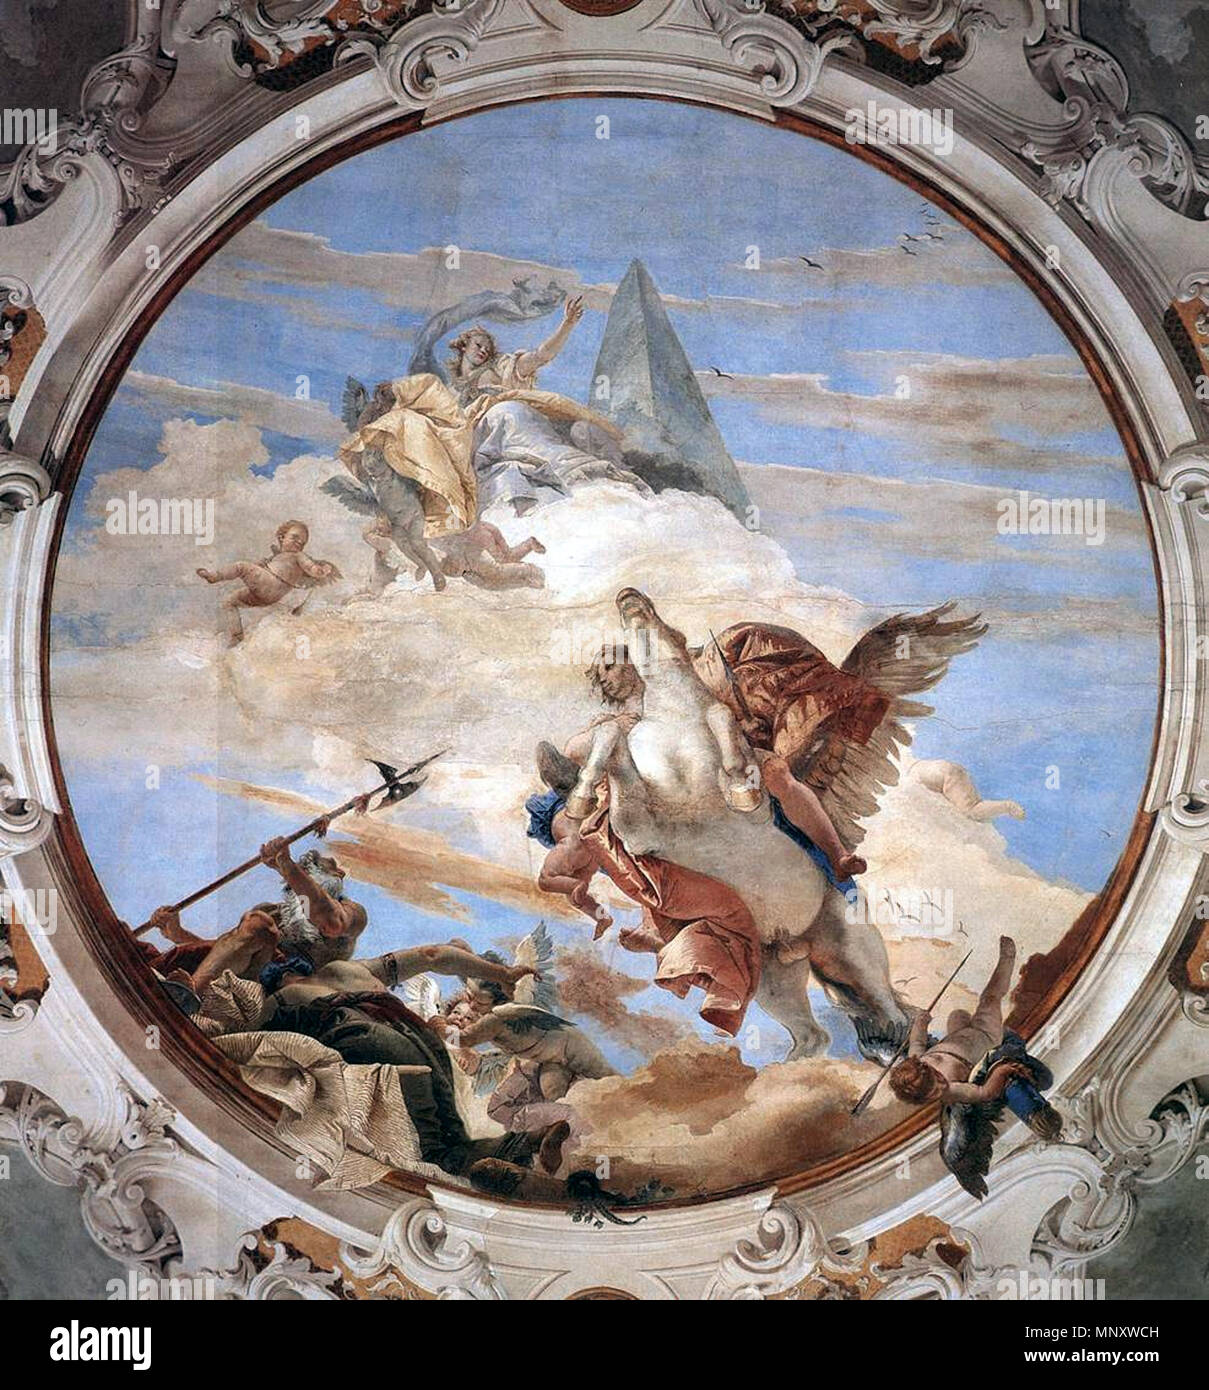 Bellerophon on Pegasus   between 1746 and 1747.   1193 Tiepolo, Giovanni Battista - Bellerophon on Pegasus - 1746-47 Stock Photo